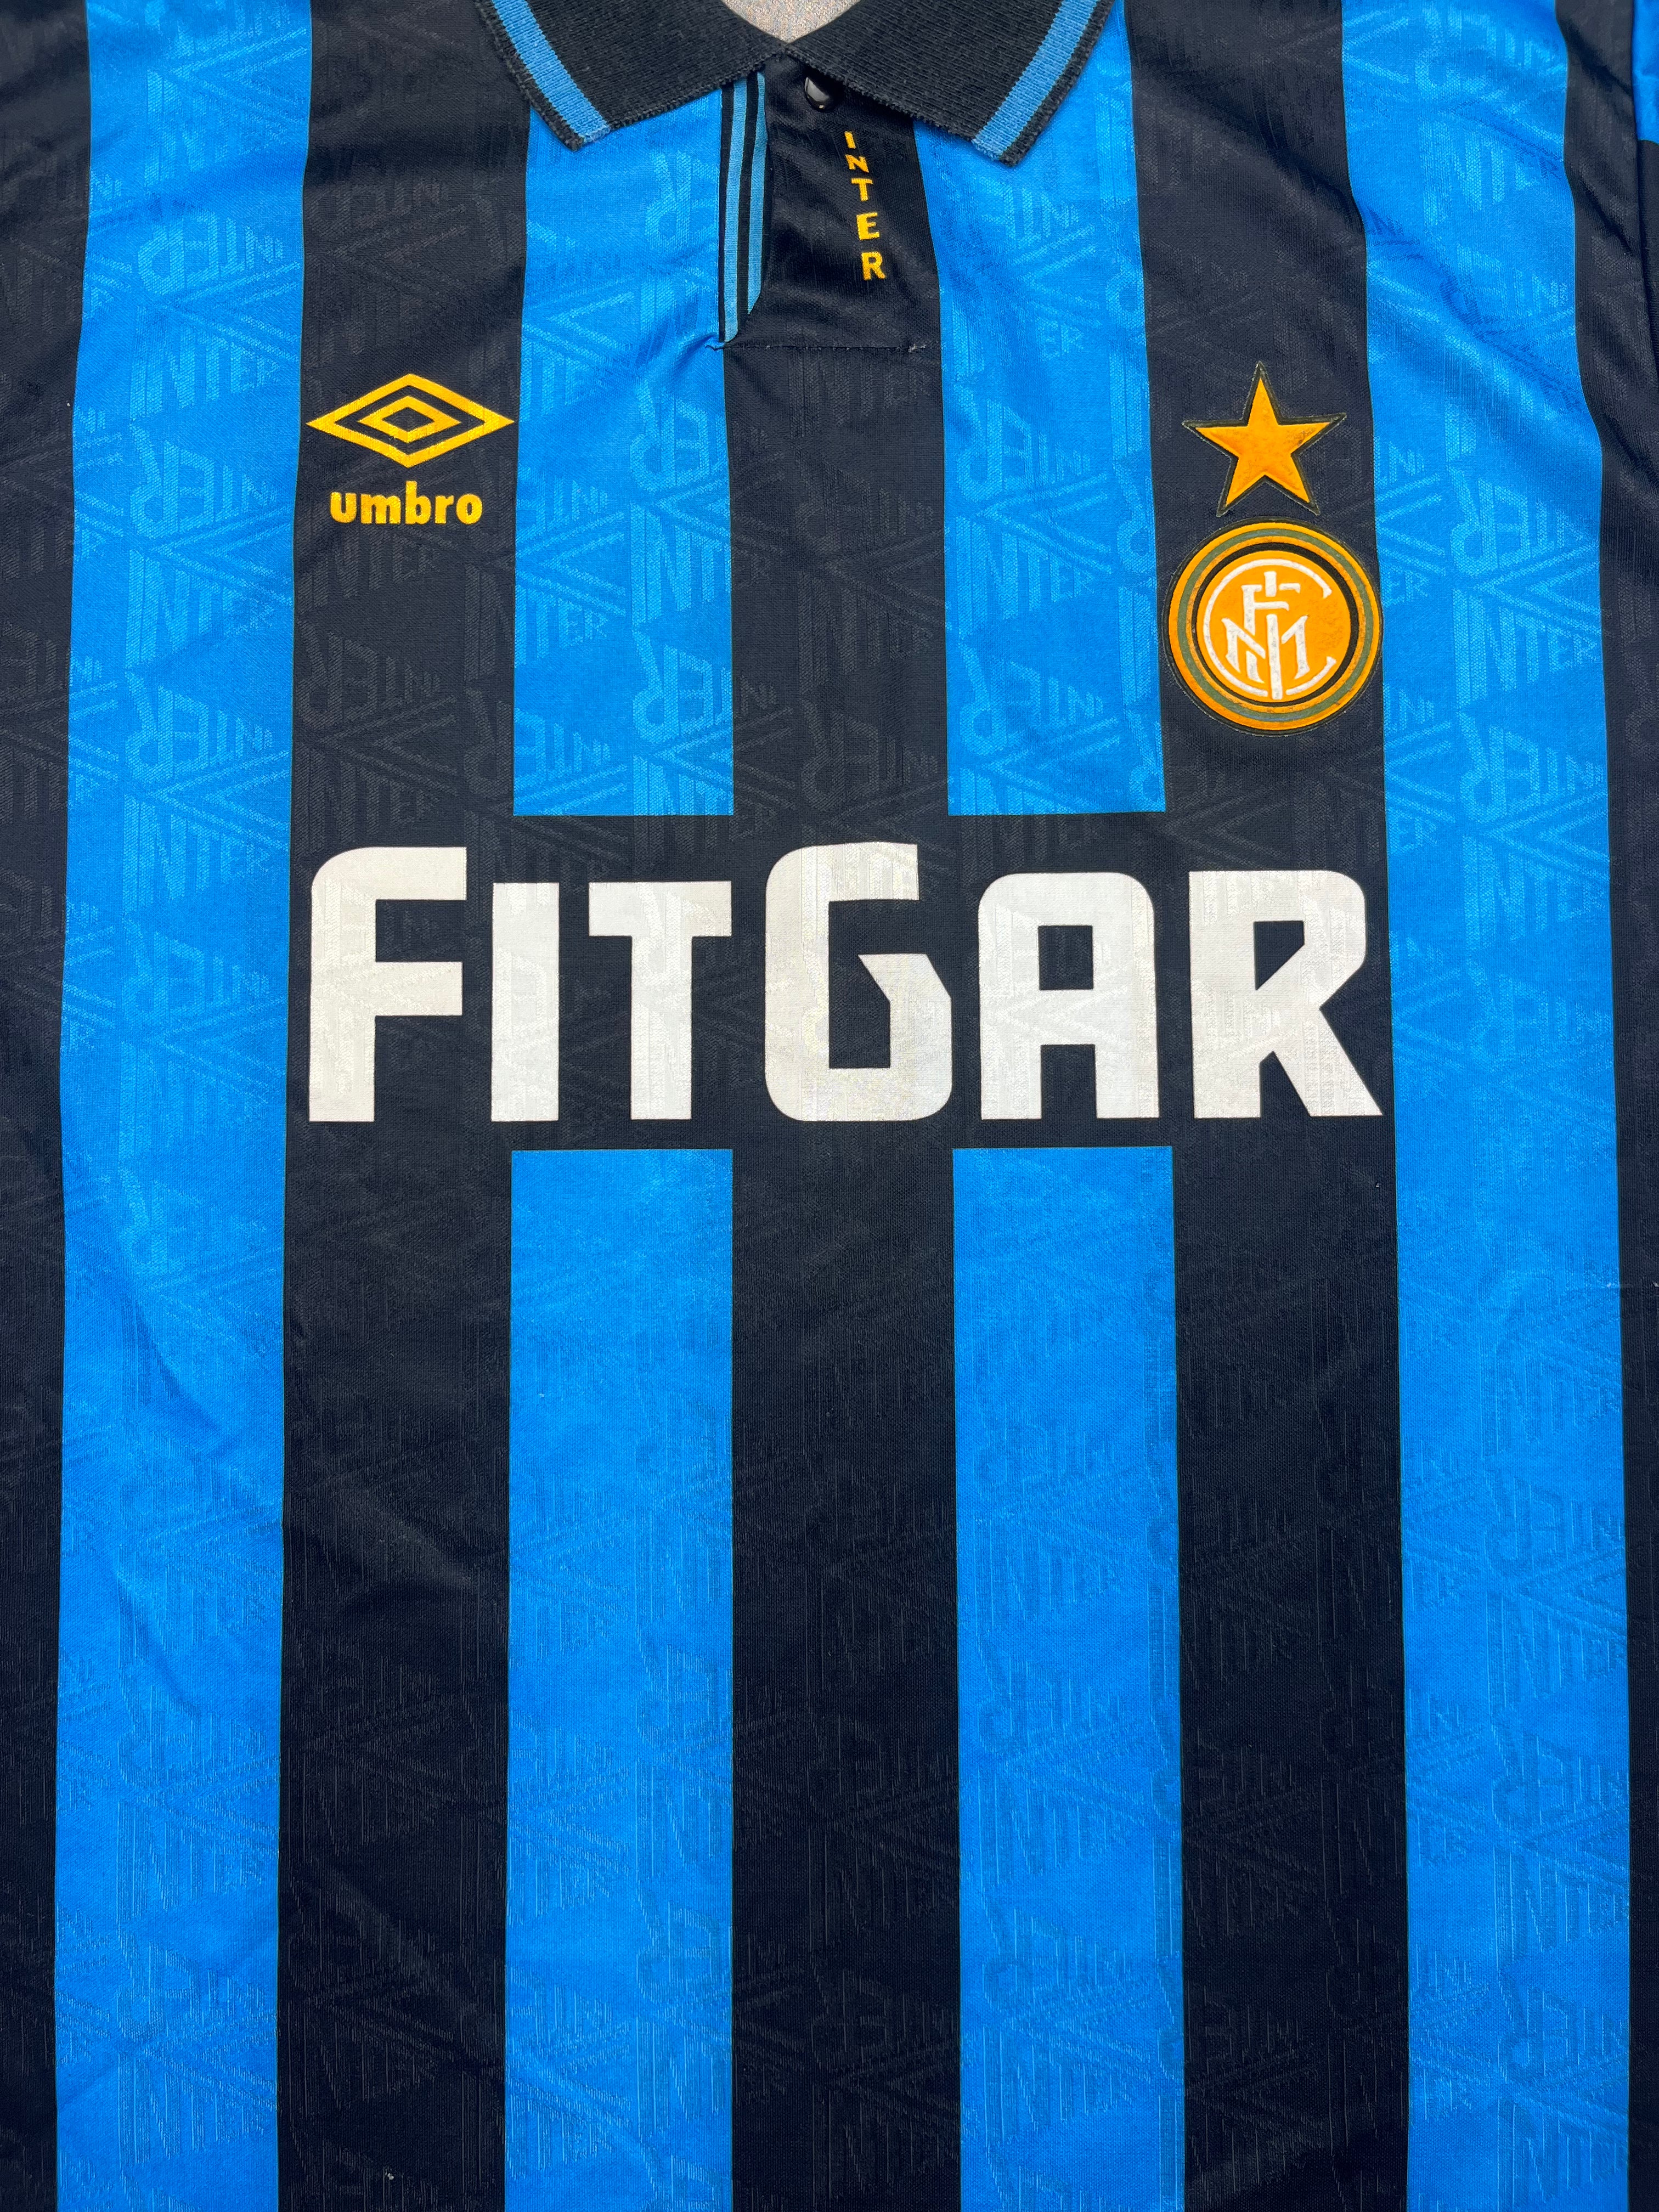 1991/92 Camiseta local del Inter de Milán (L) 9/10